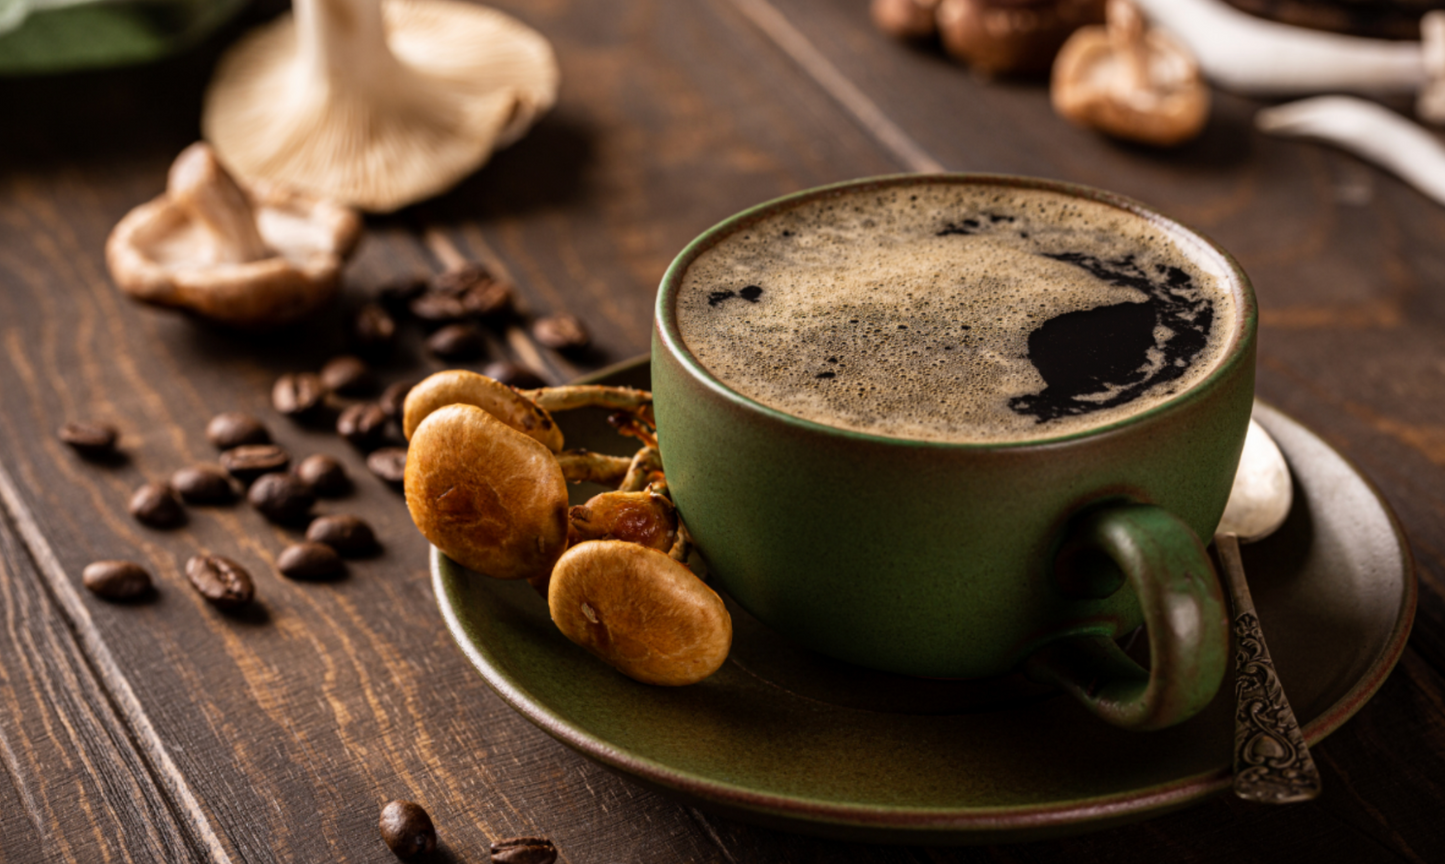 Mushroom coffee benefits